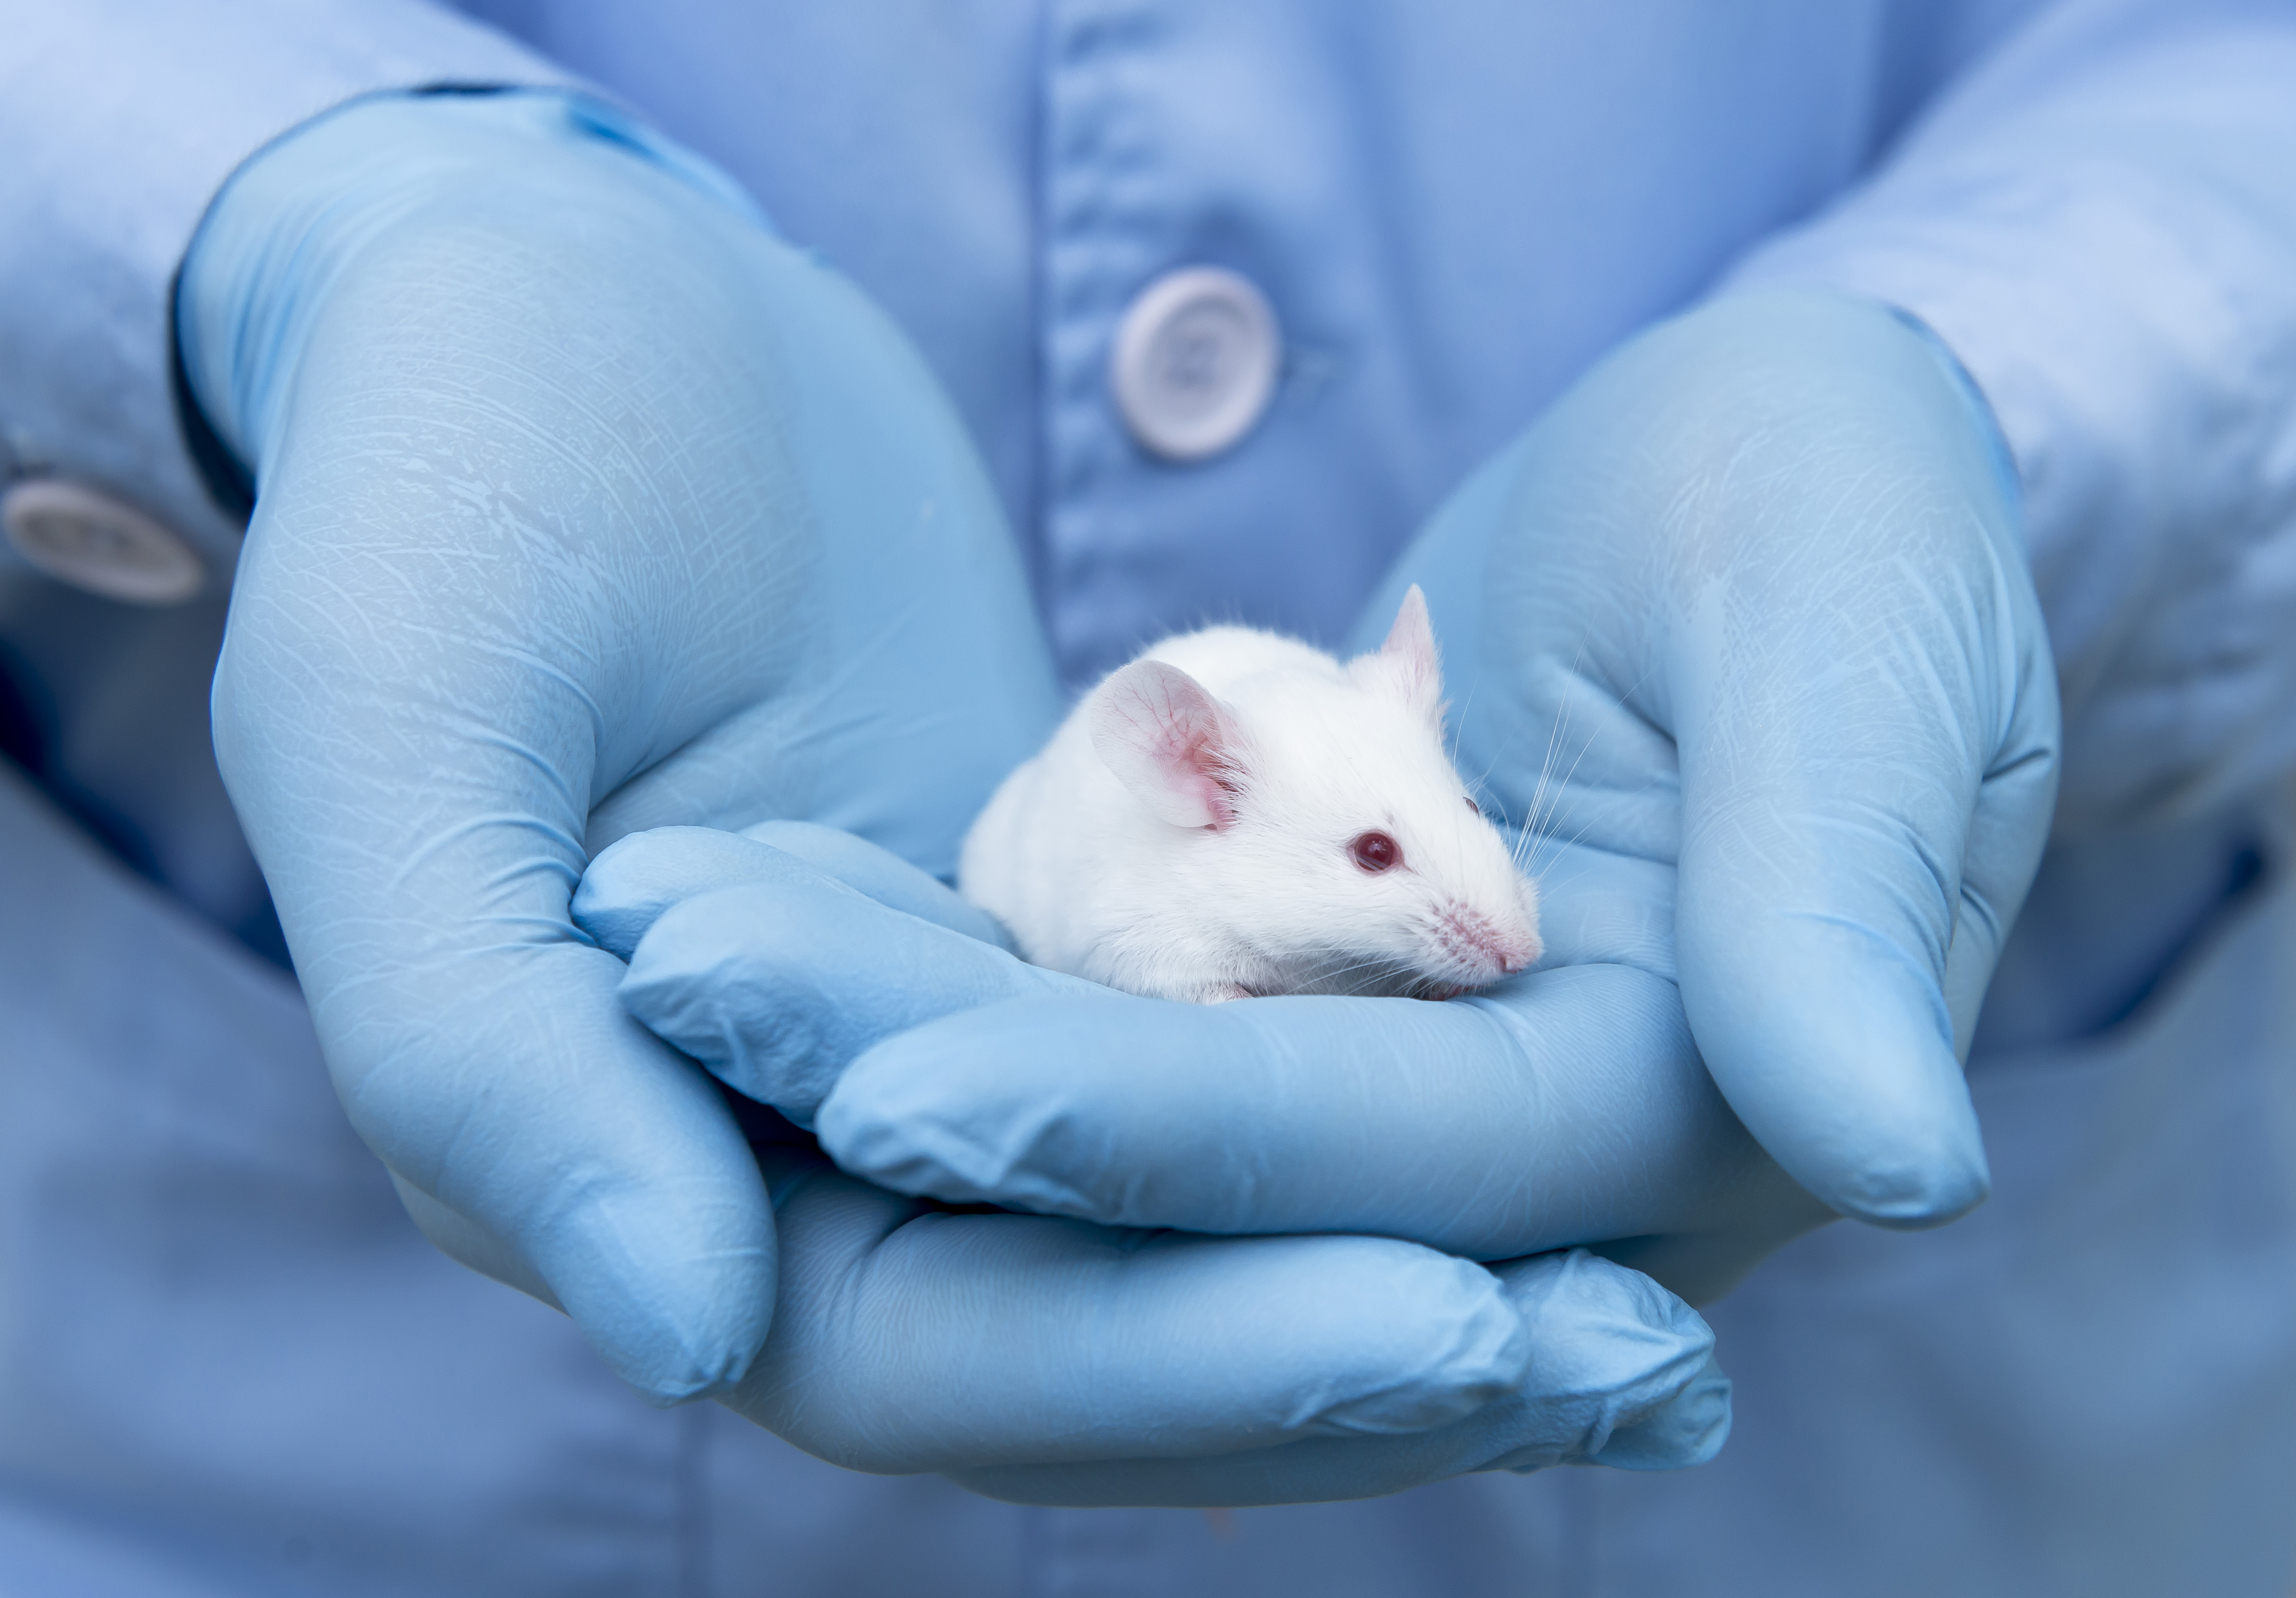 Animal lab. Исследования на мышах. Лабораторные мыши. Лабораторные животные. Лабораторные исследования животных.